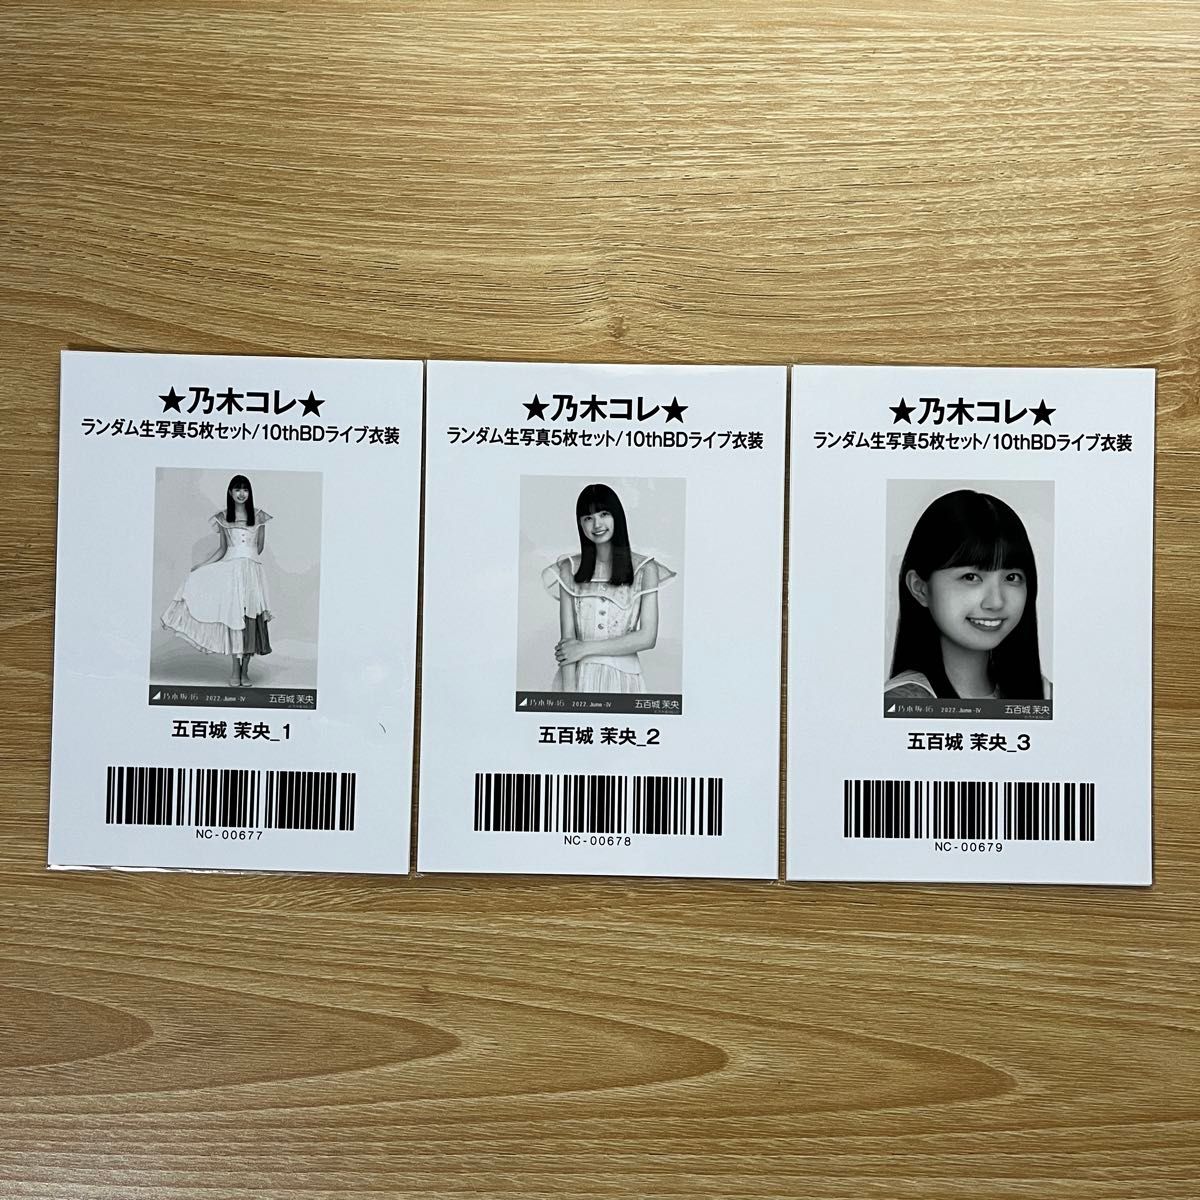 乃木坂46 生写真 五百城茉央 10thDBライブ衣装 3種 コンプ